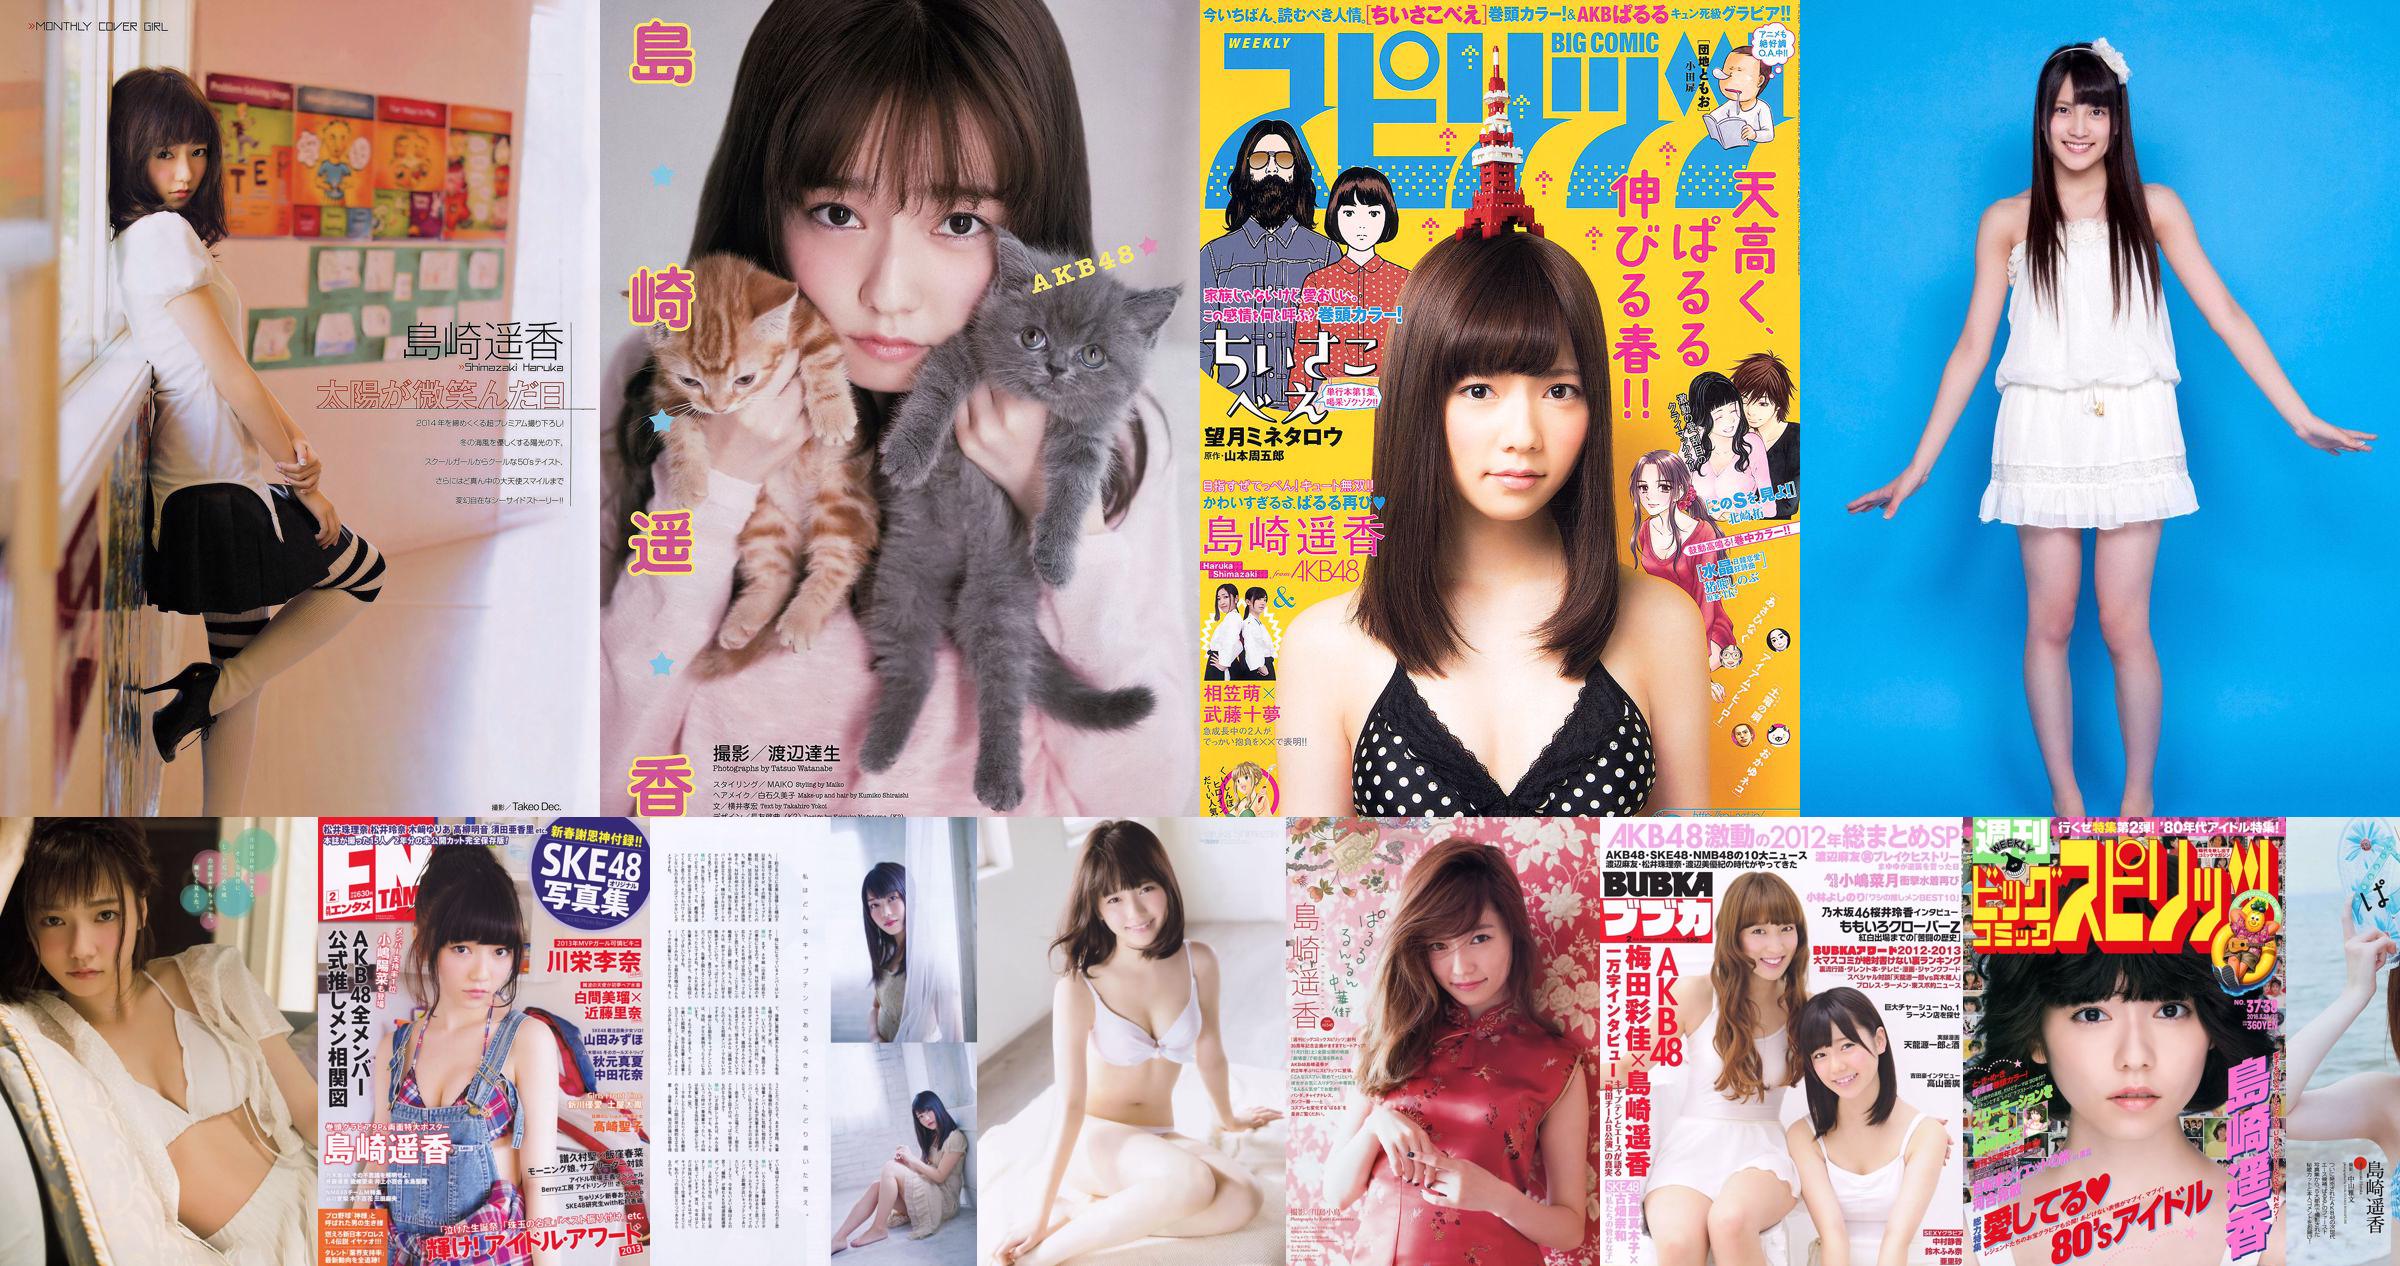 Shimazaki Haruka, Kawamoto Saya, Sasaki Yukari [Weekly Young Jump] 2015 No. 27 Photo Magazine No.51ab8b Page 3